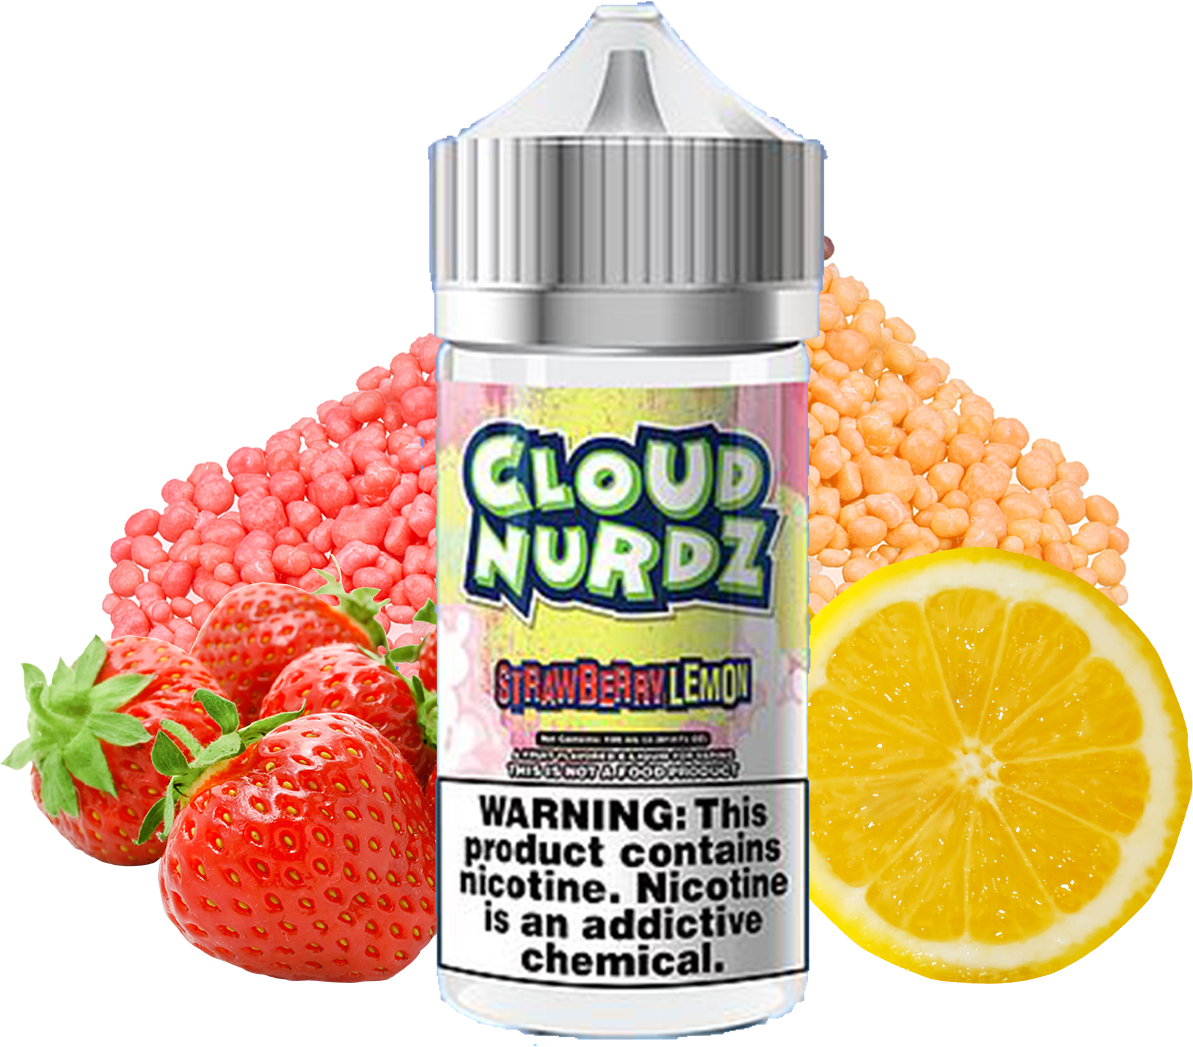 images/virtuemart/product/Cloud Nurdz Strawberry Lemon (100ml).png